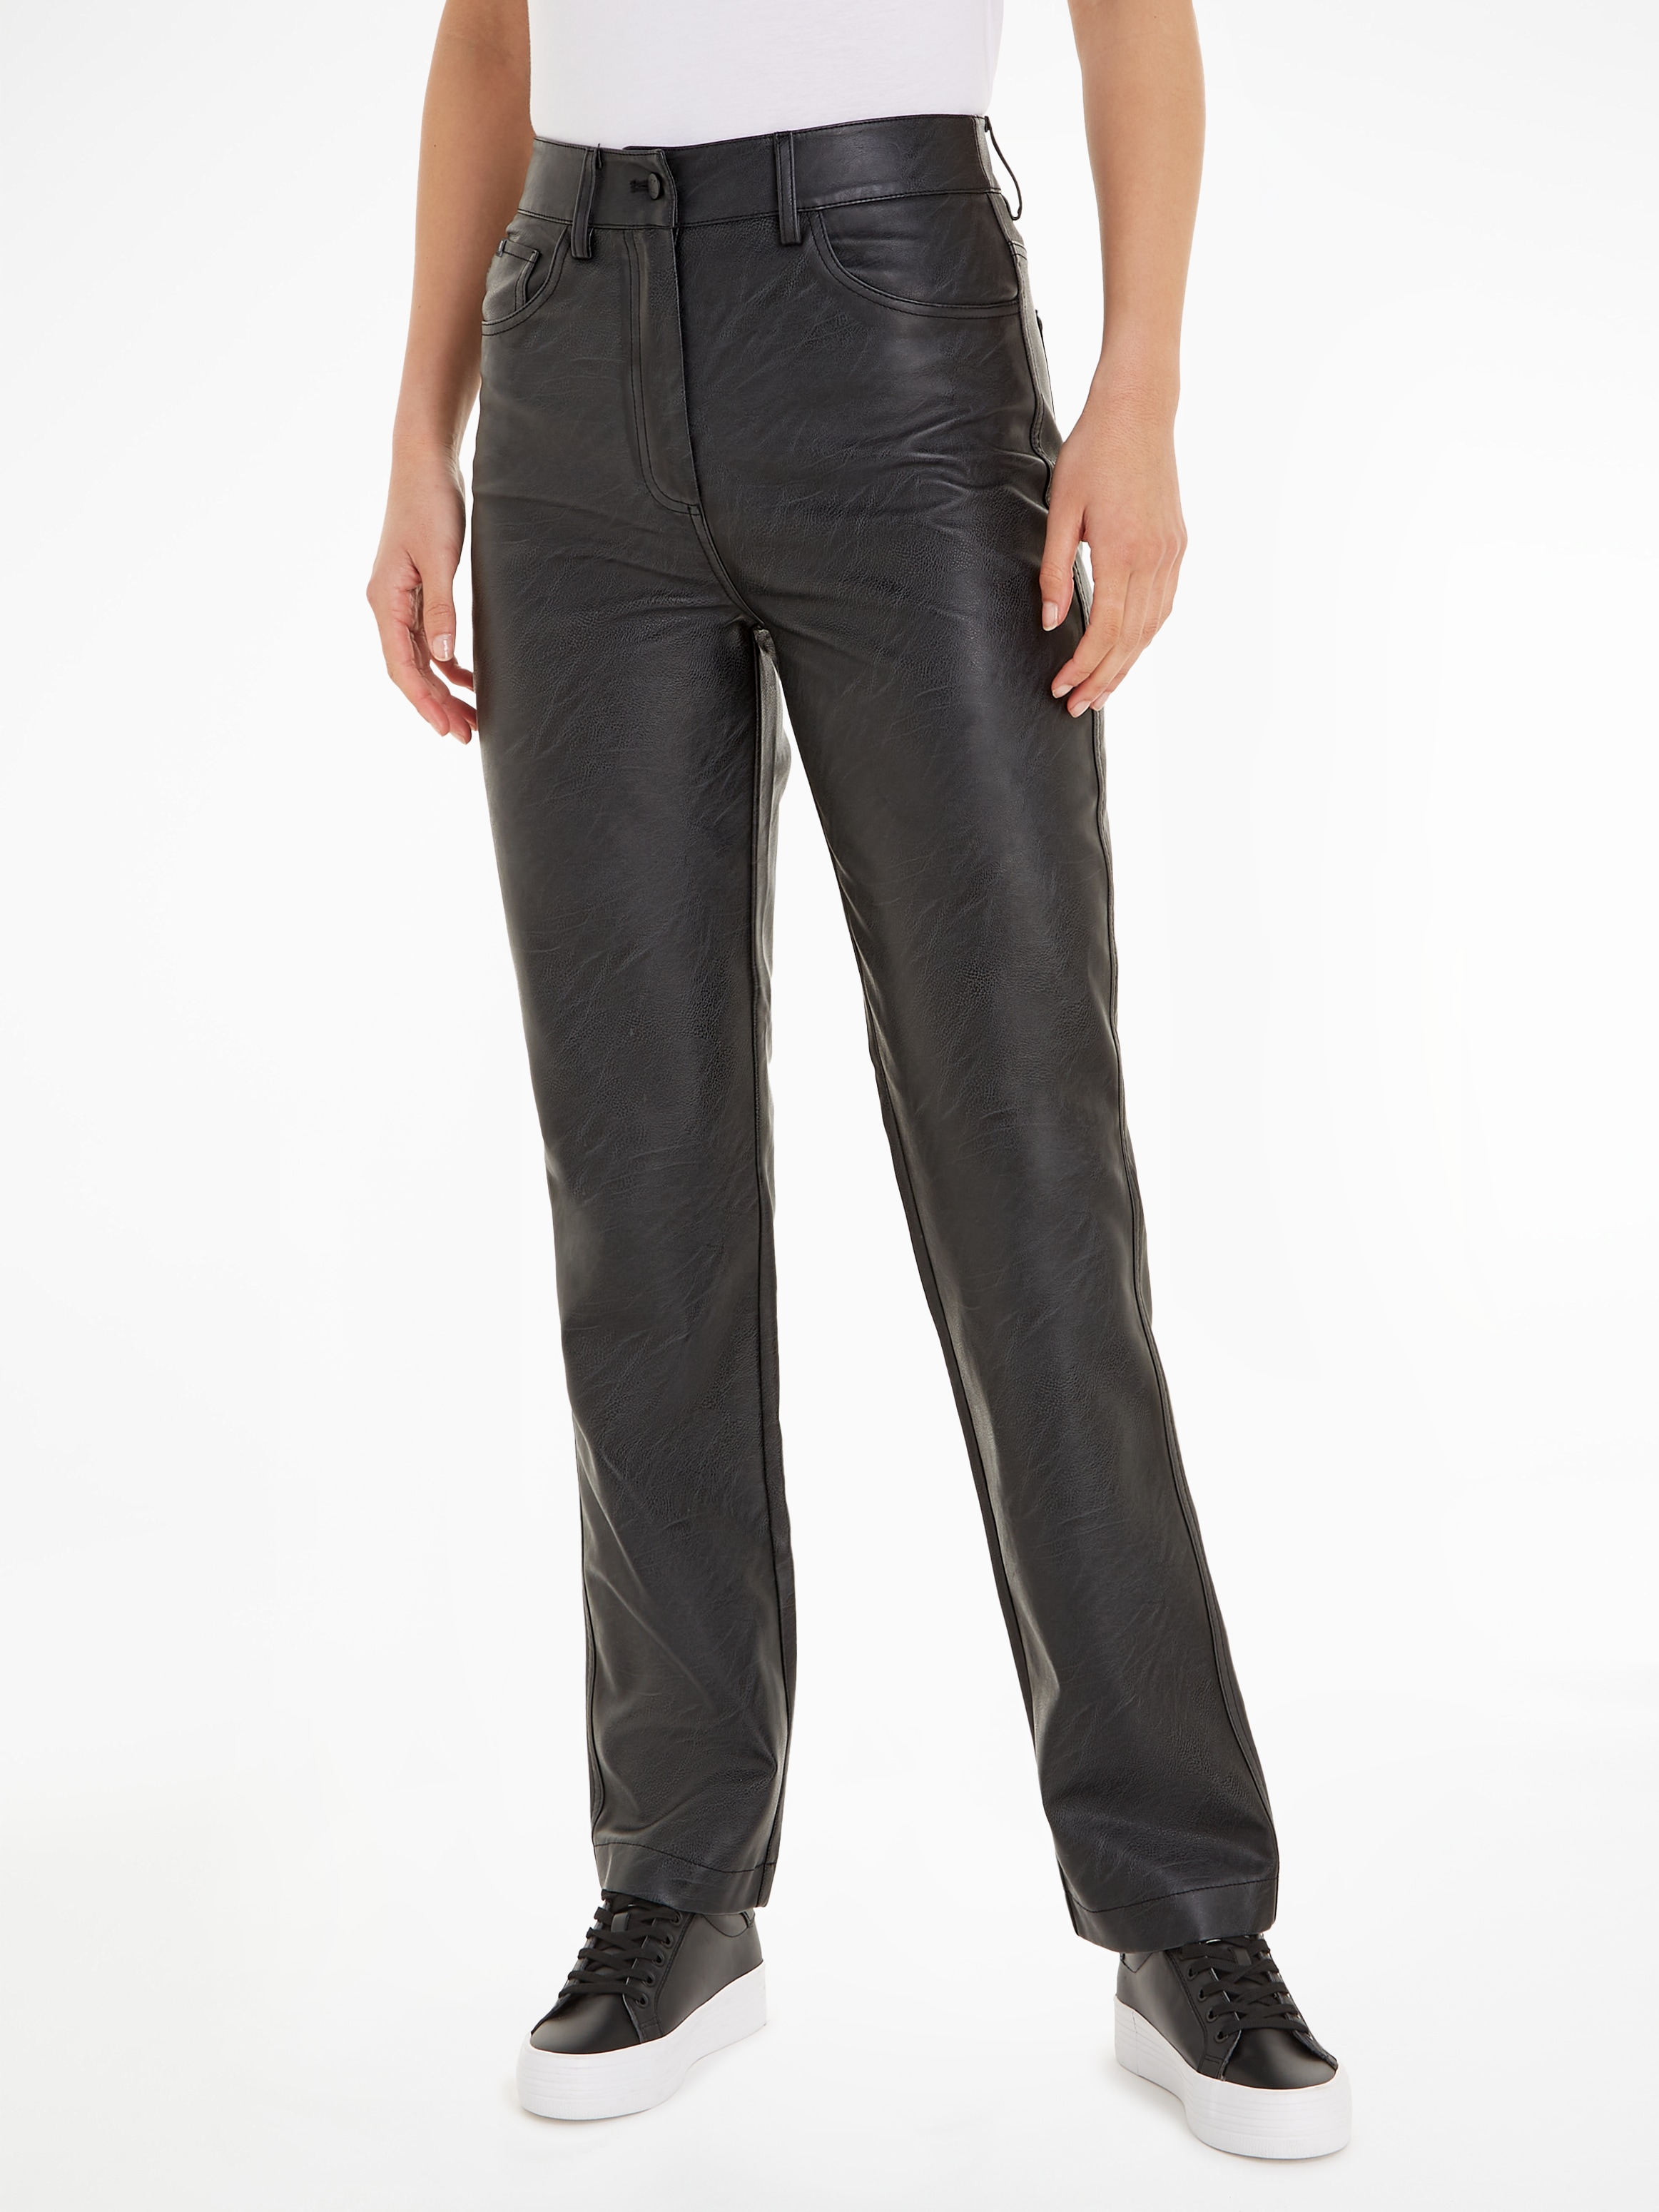 Calvin Klein Jeans Lederimitathose »FAUX LEATHER HIGH RISE STRAIGHT«